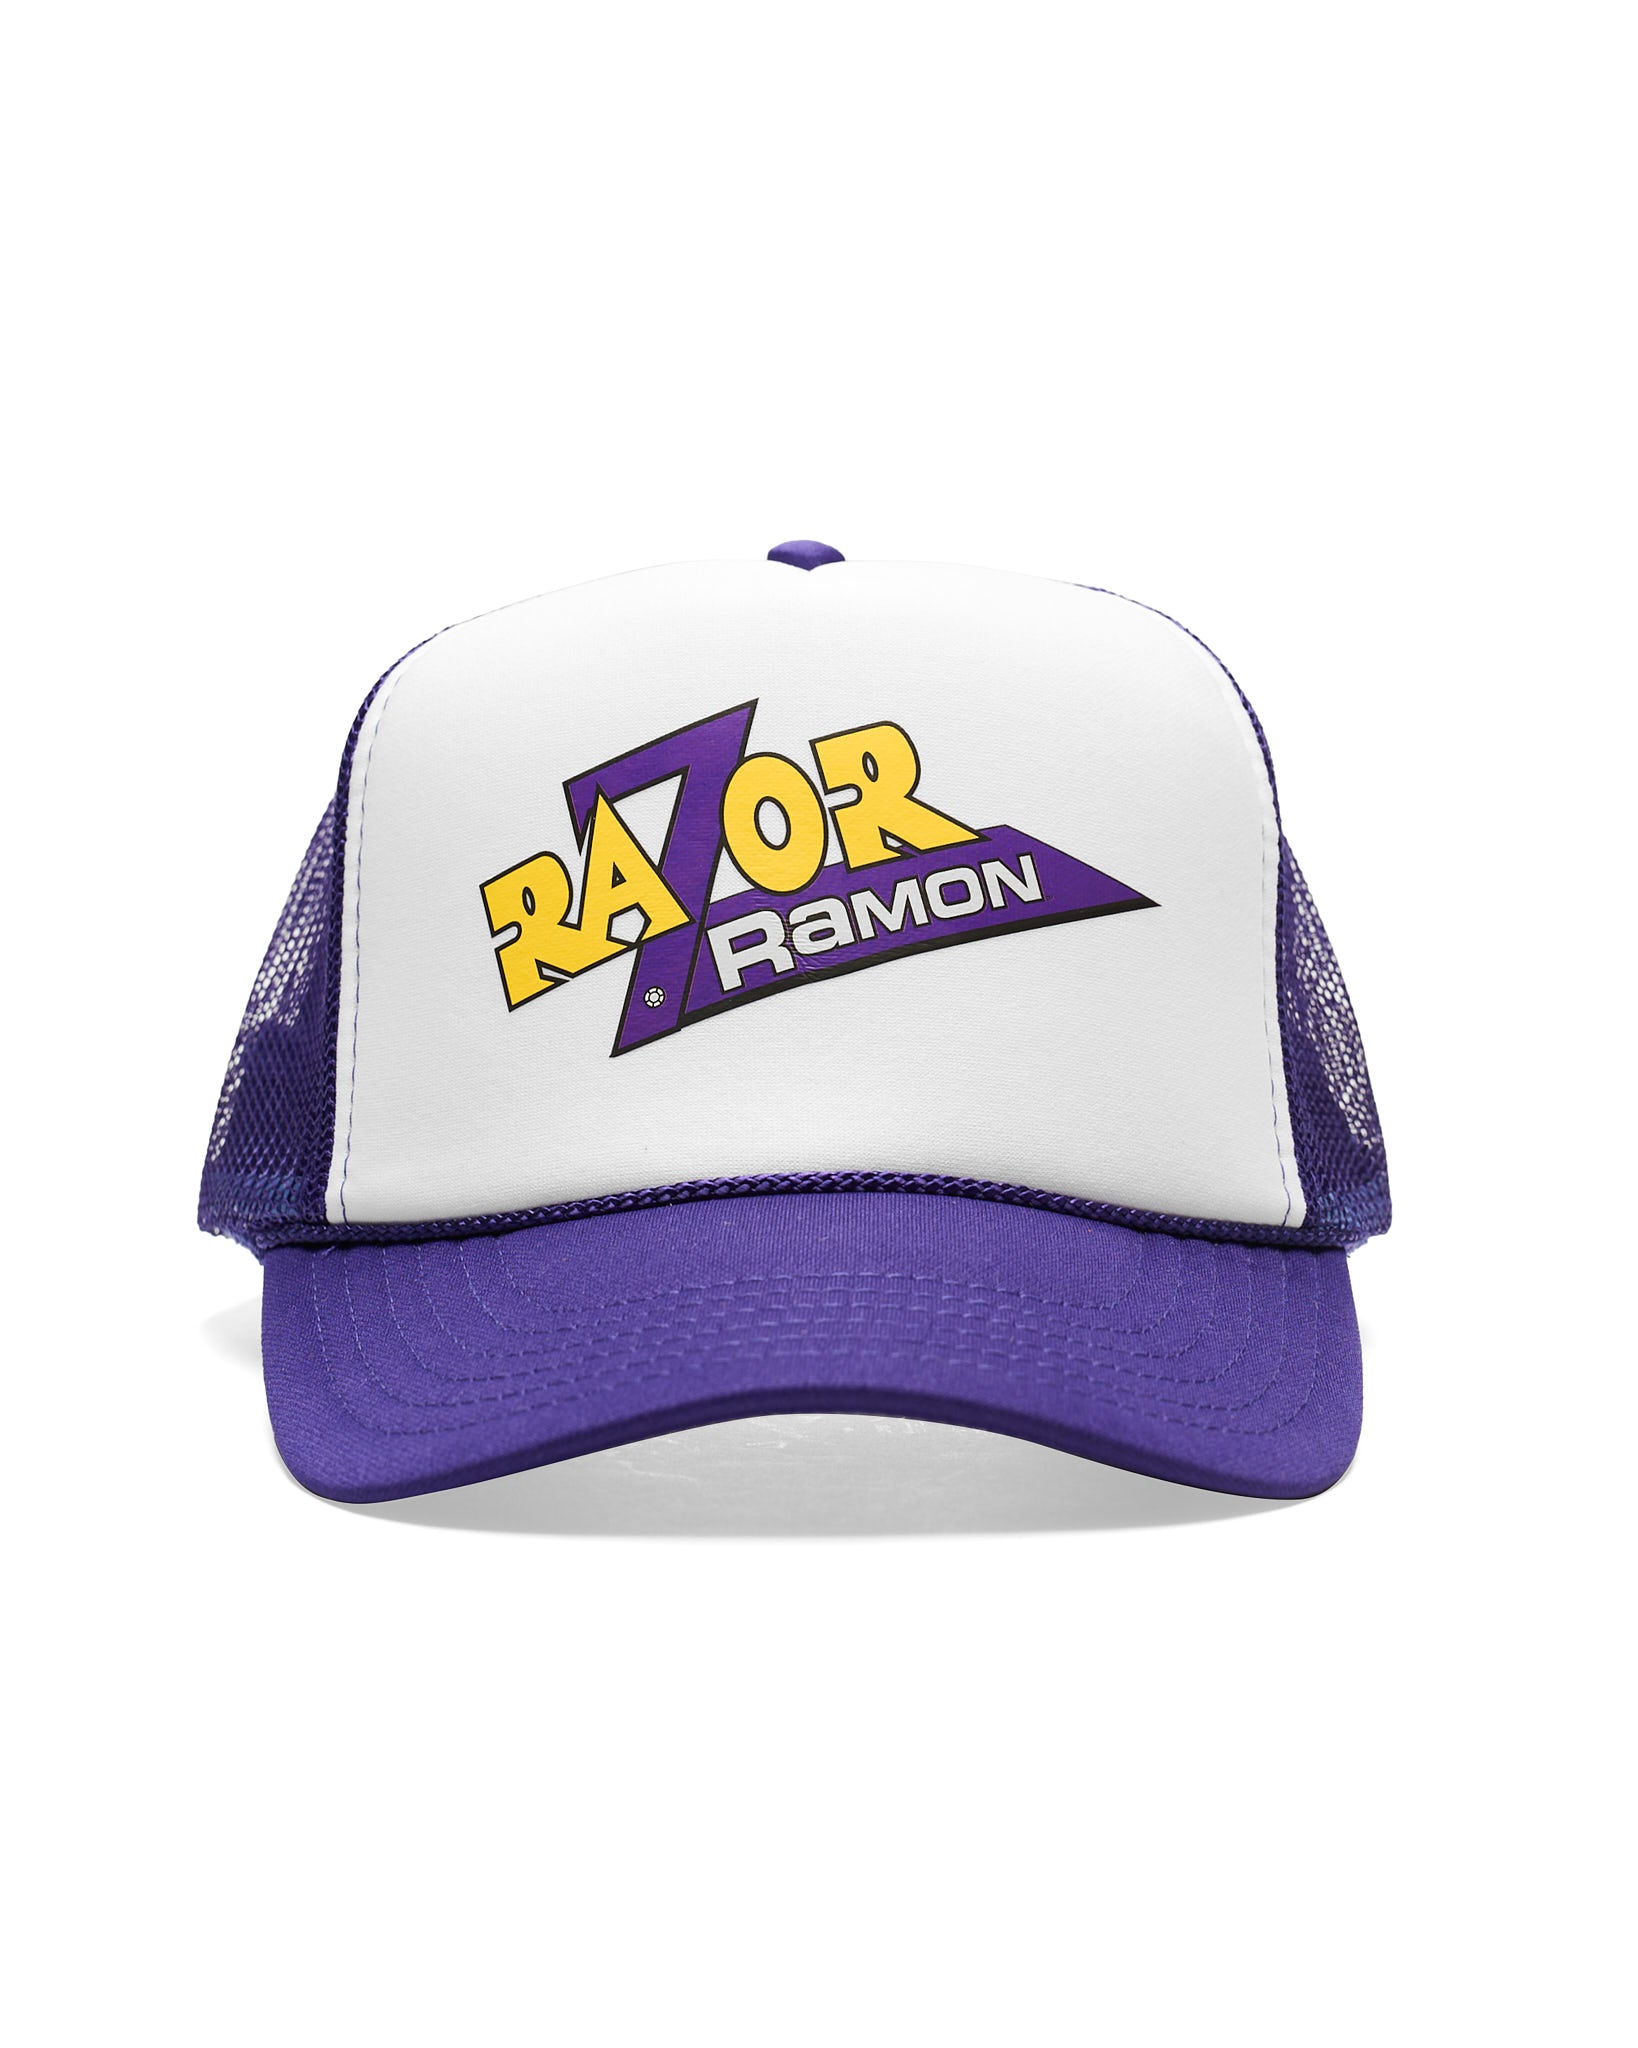 Razor Ramon Purple Trucker Hat